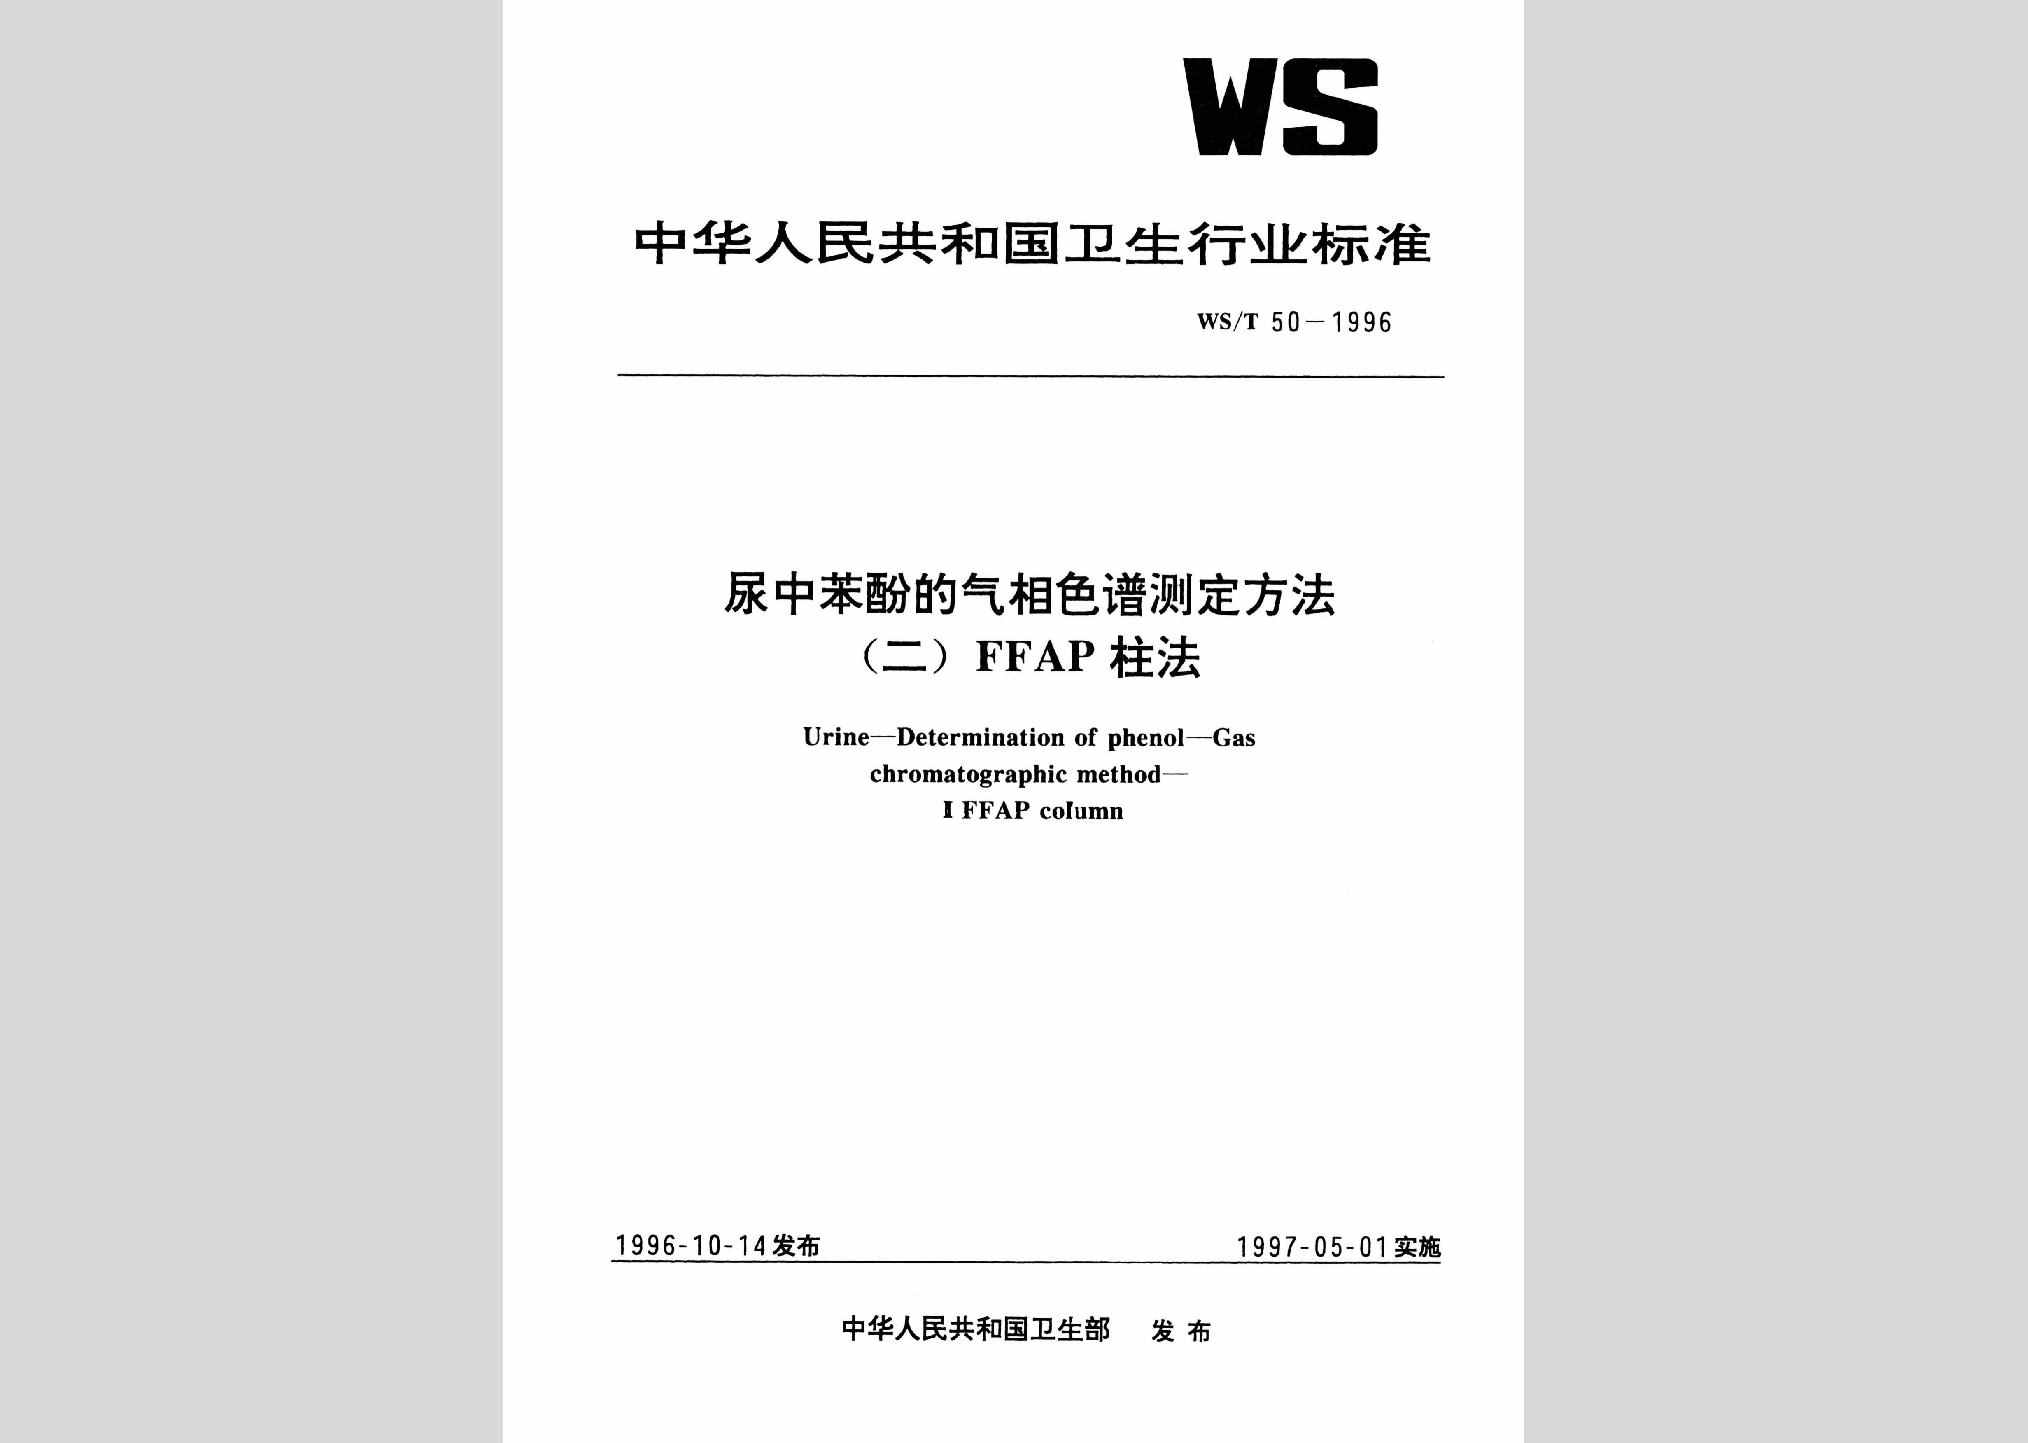 WS/T50-1996：尿中苯酚的气相色谱测定方法（二）FFAP柱法